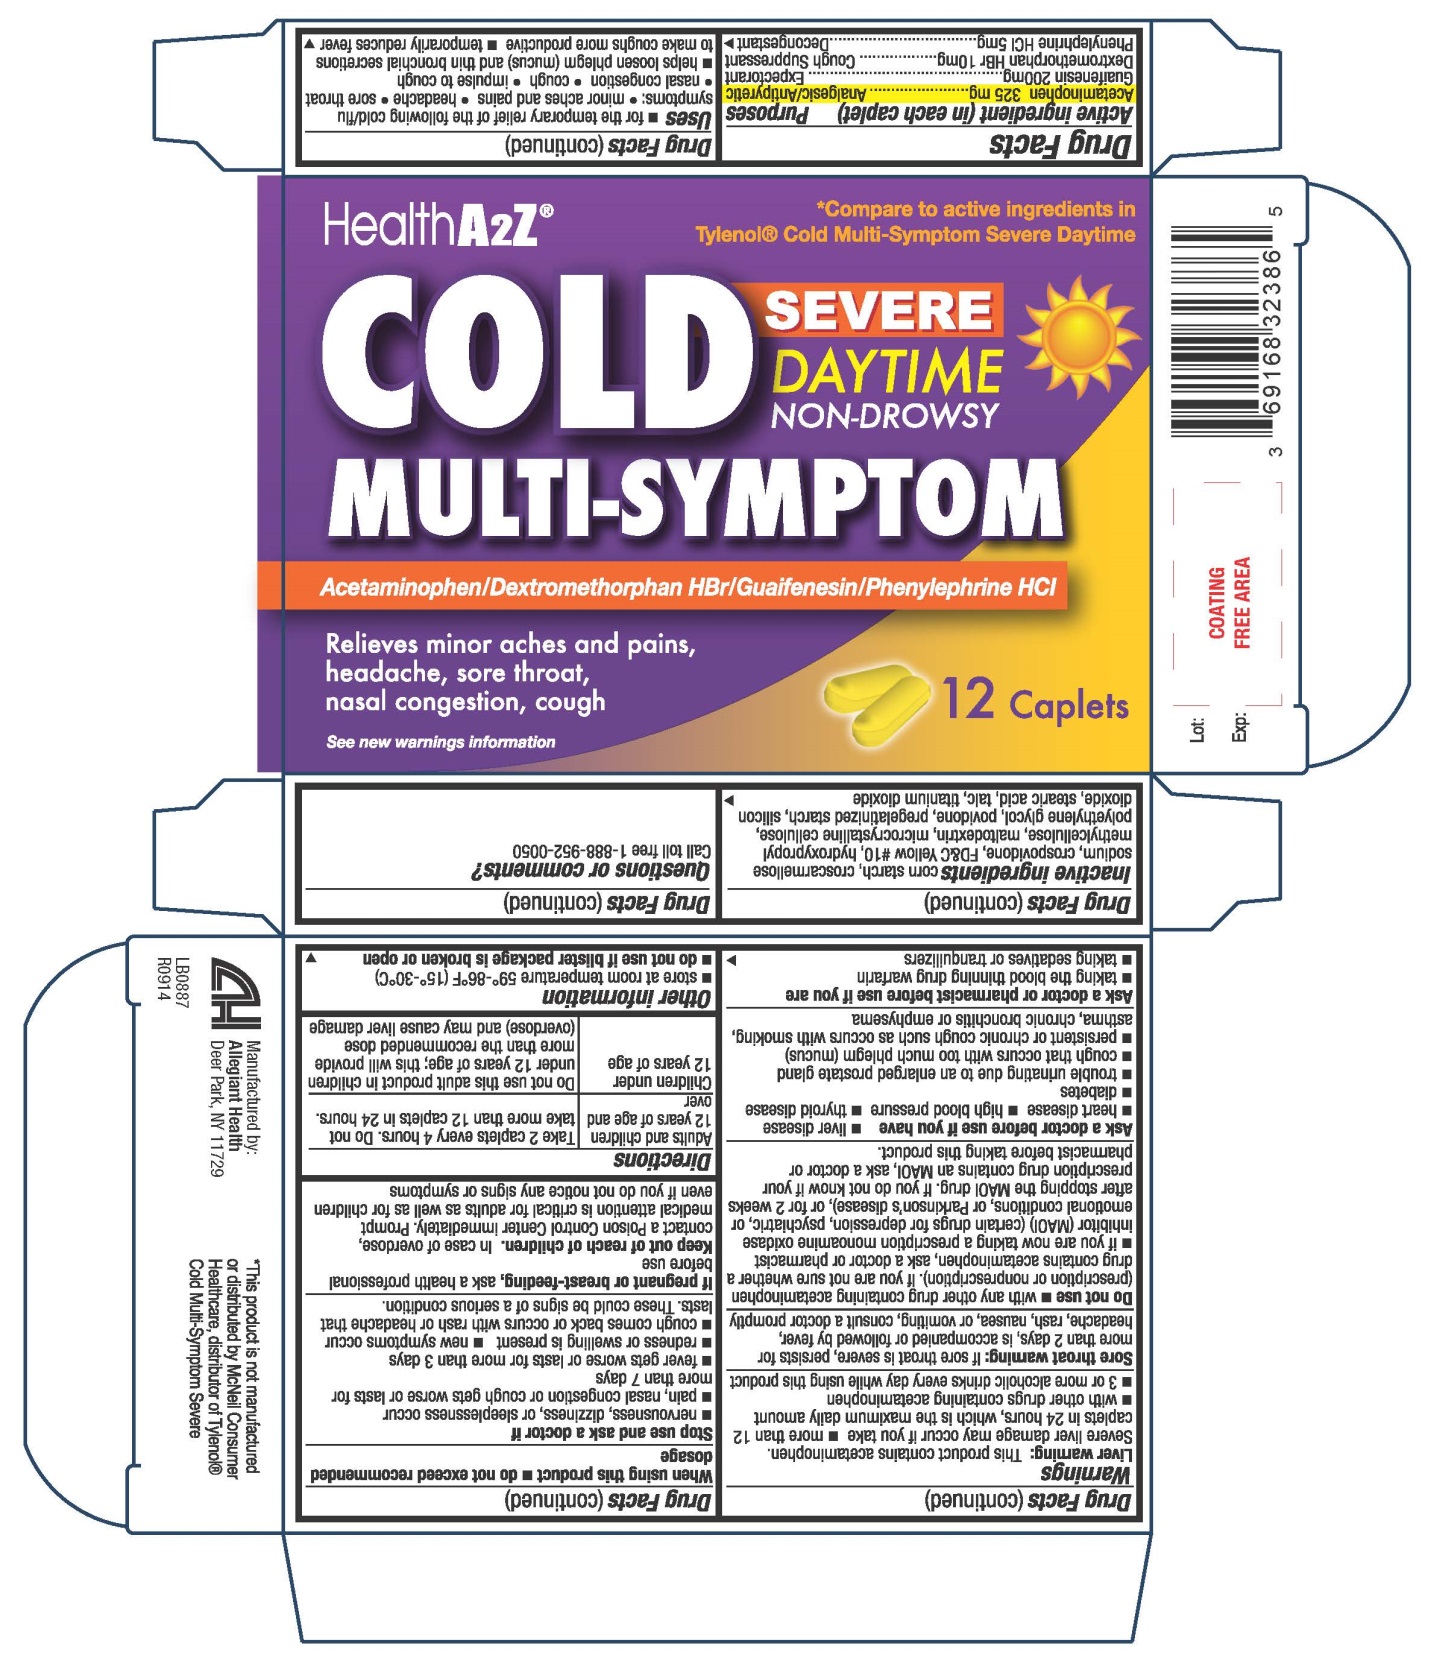 Z:\SPL-OTC Mono\Allegiant Health\Cold Multi Symptom Daytime\LB0887.jpg